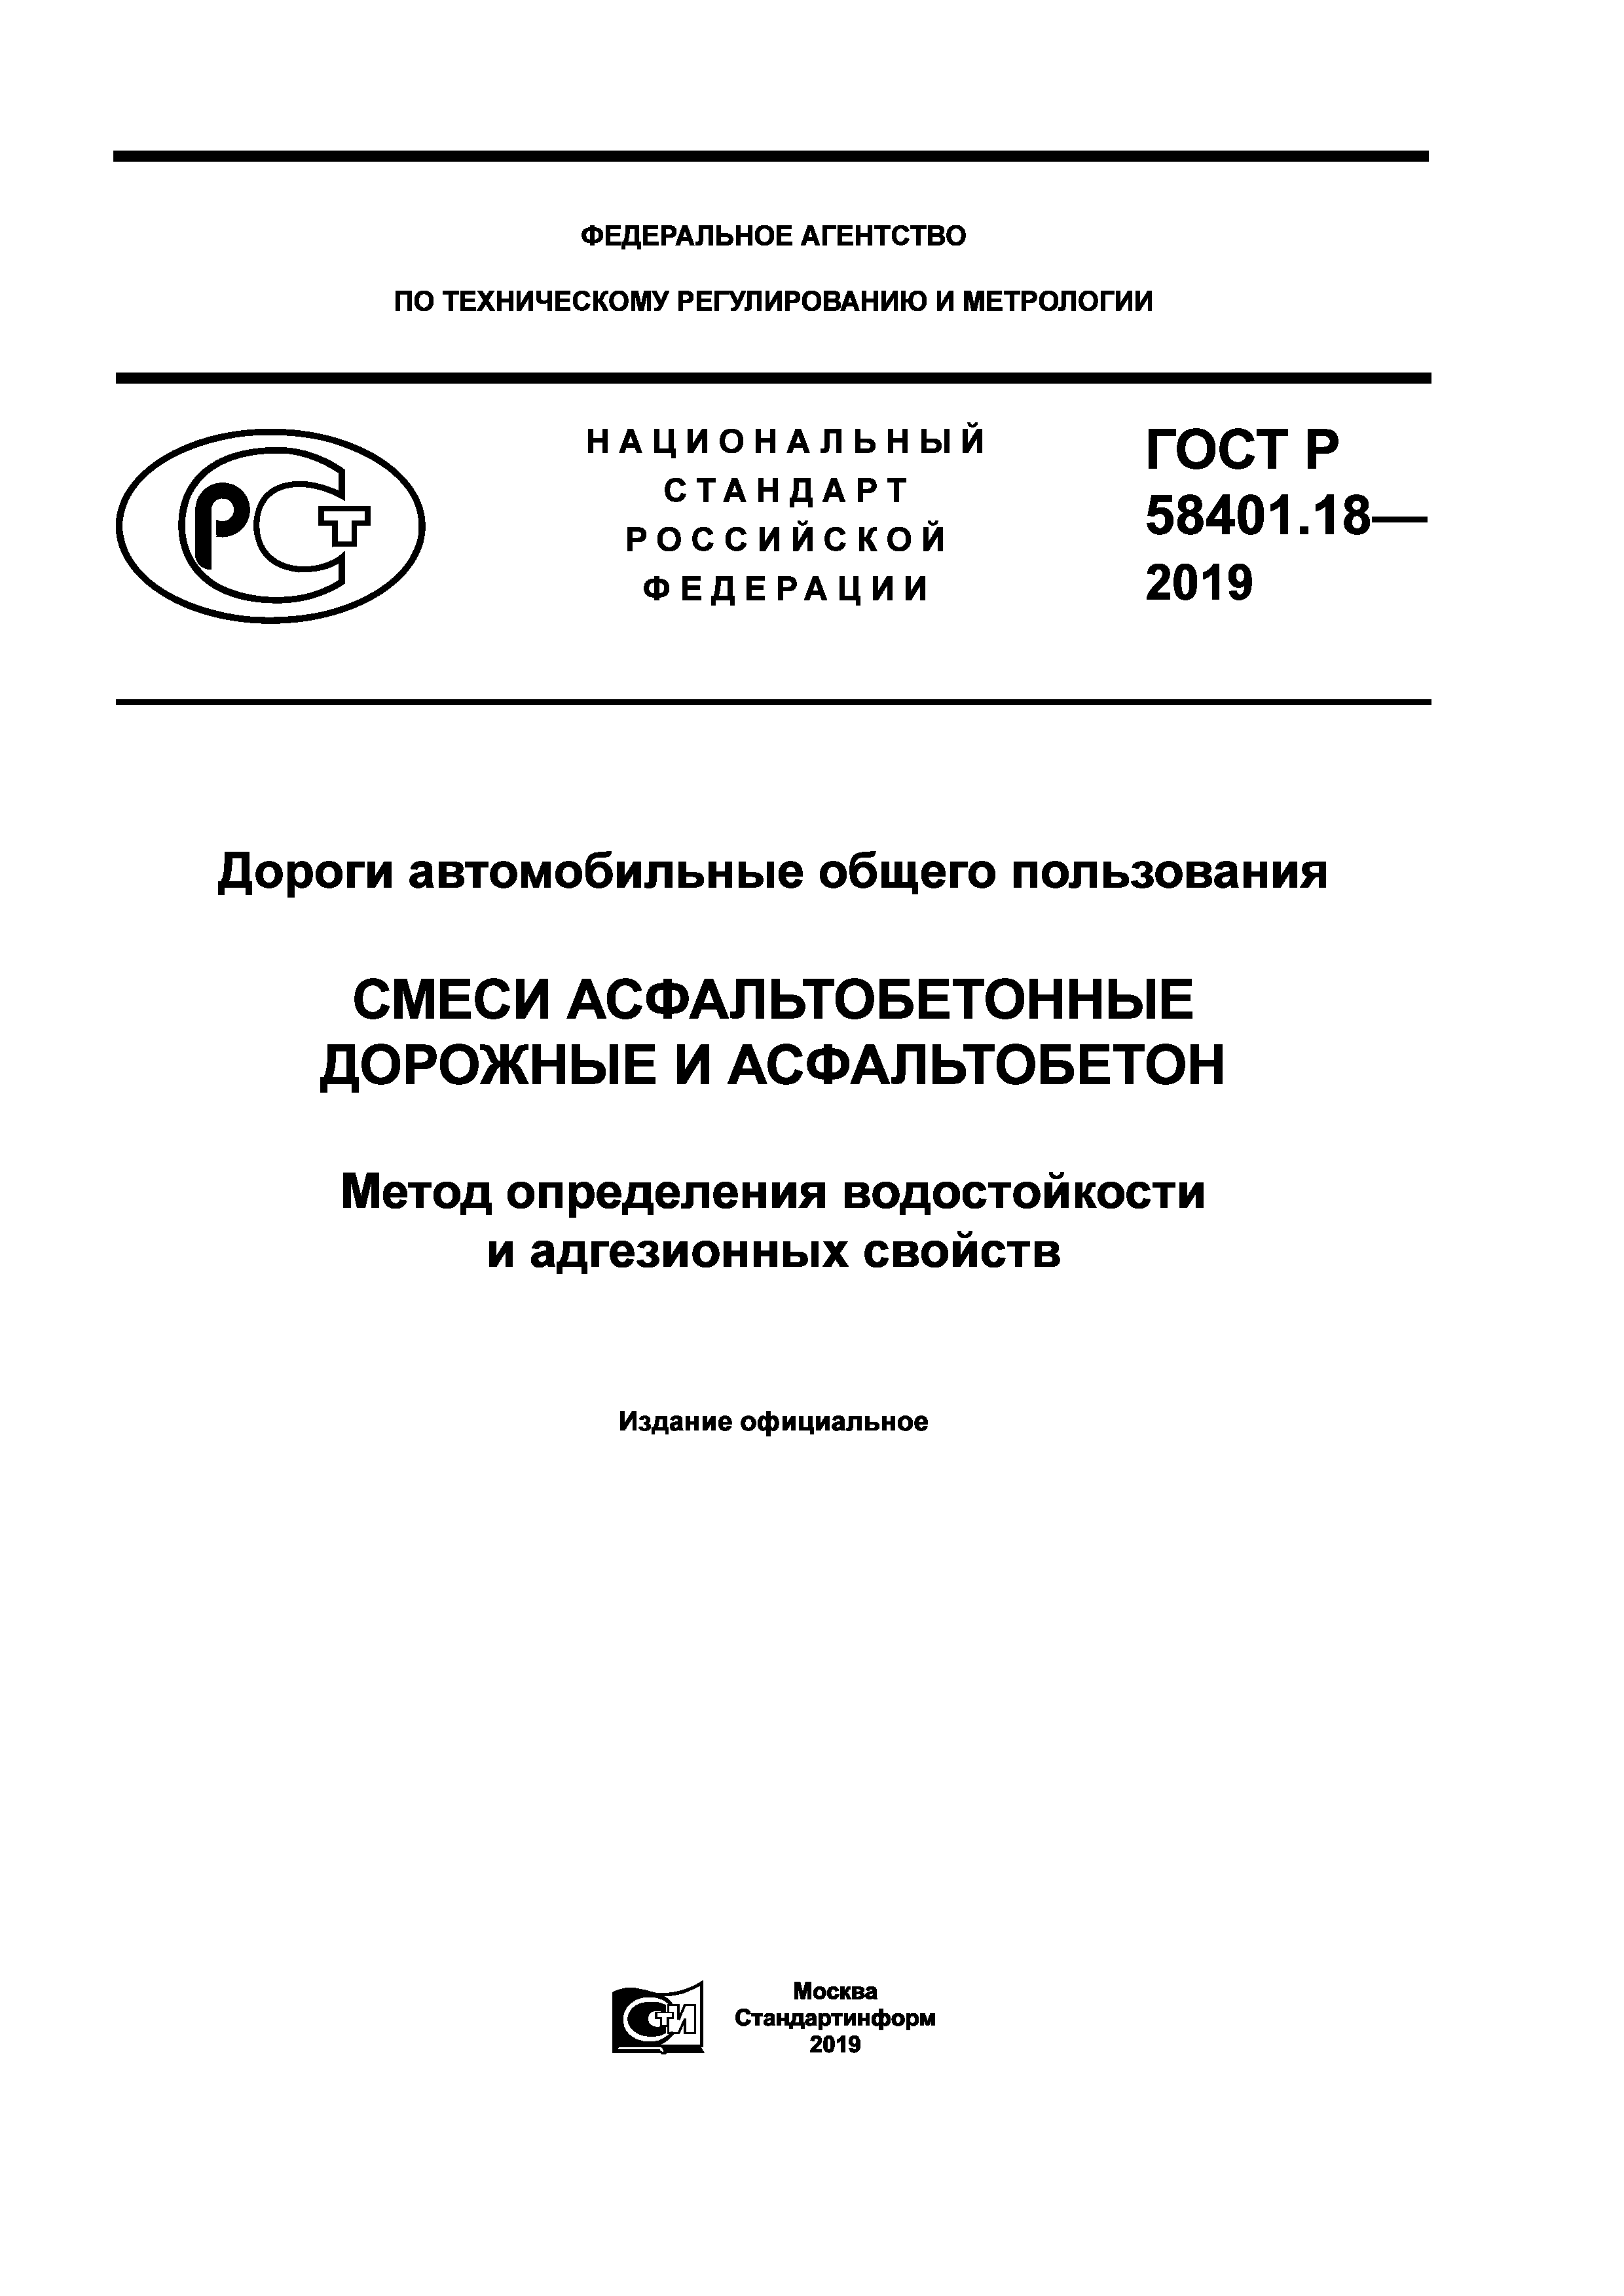 ГОСТ Р 58401.18-2019